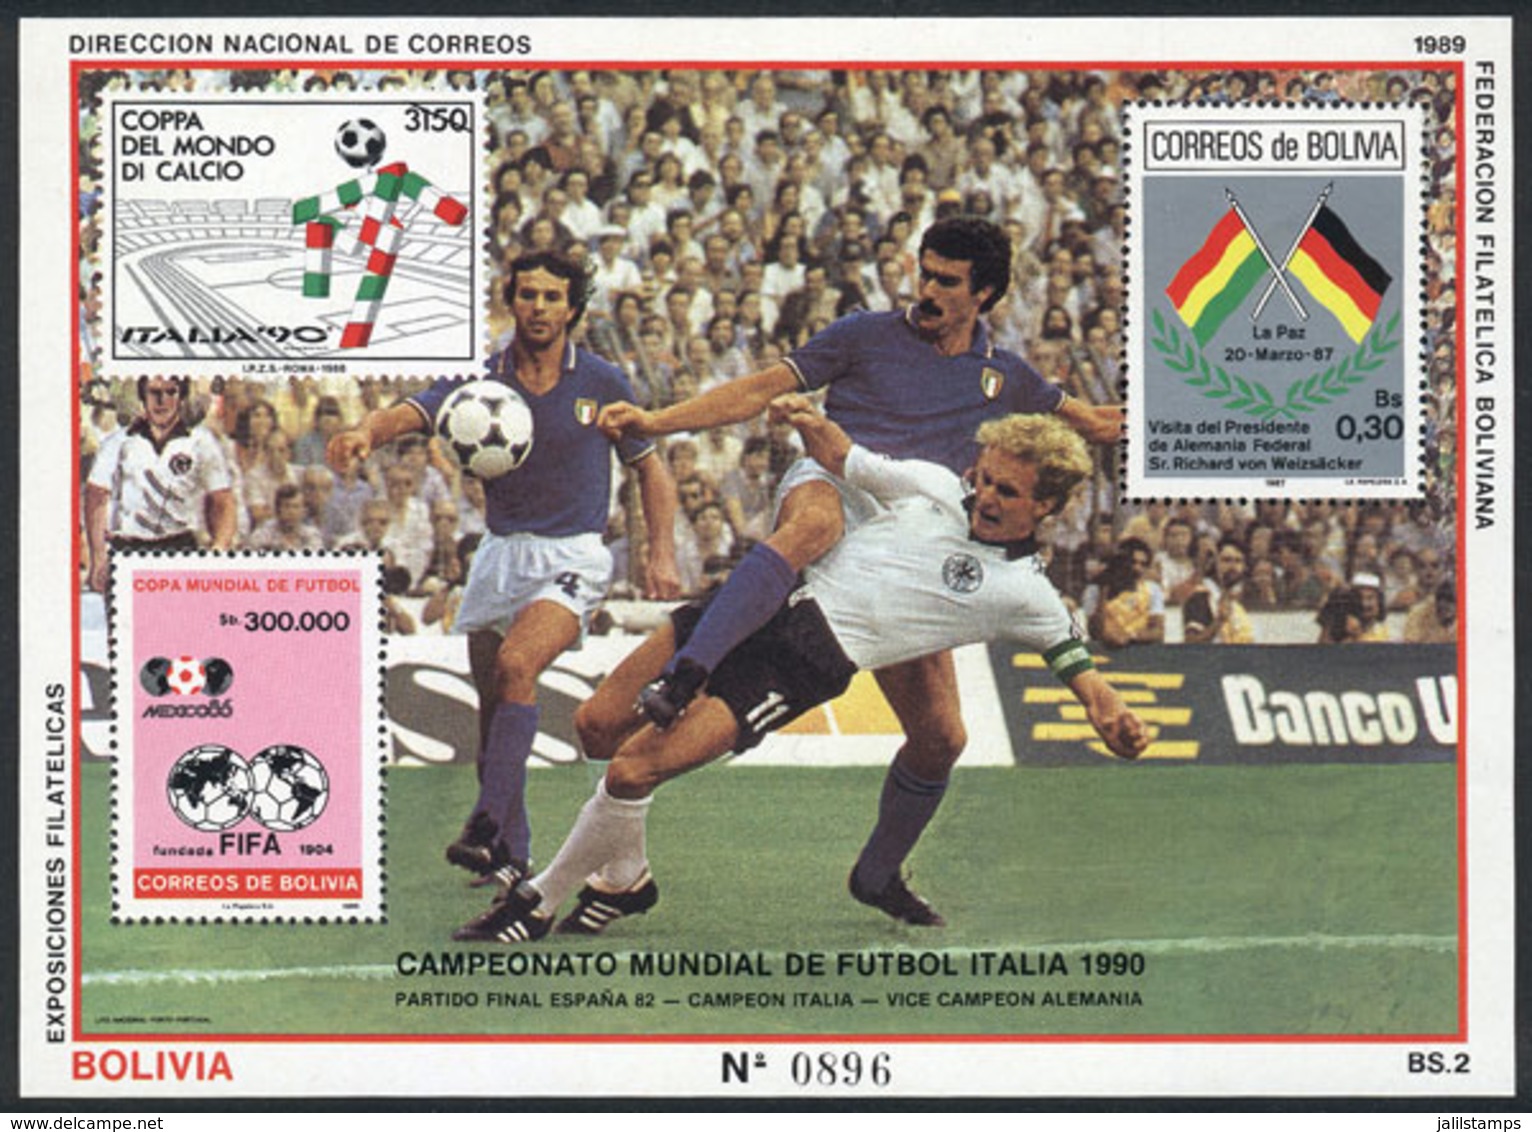 BOLIVIA: Souvenir Sheet Michel 178, 1989 Italia 90 Football World Cup, VF Quality! - Bolivia